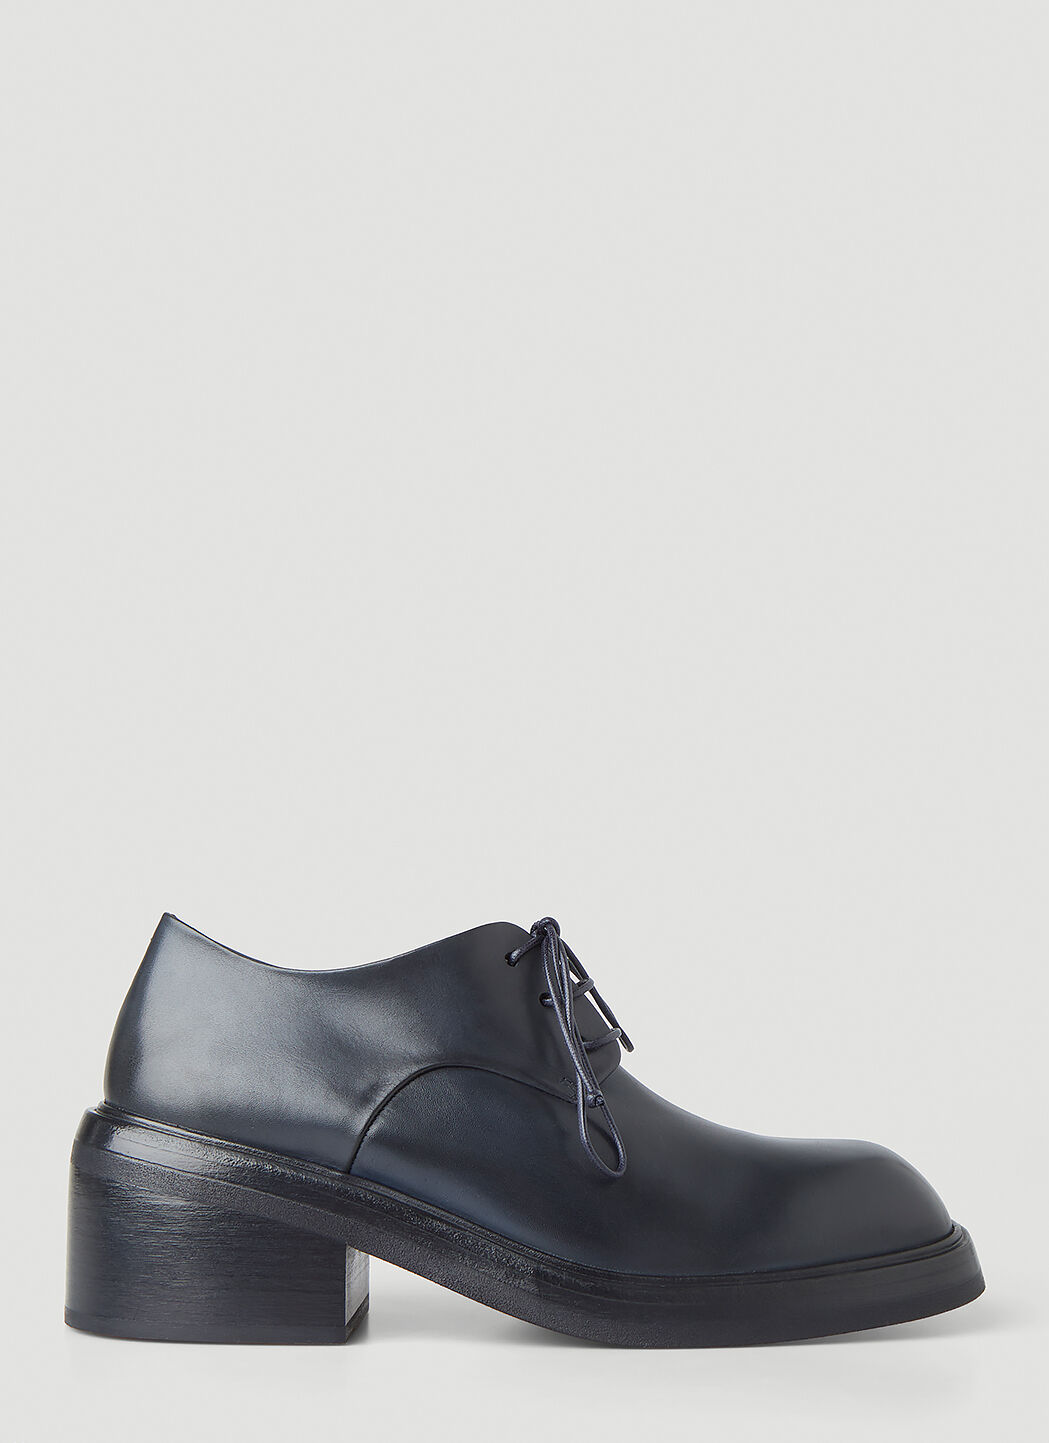 Vivienne Westwood Block Heel Derby Shoes Black vvw0255059